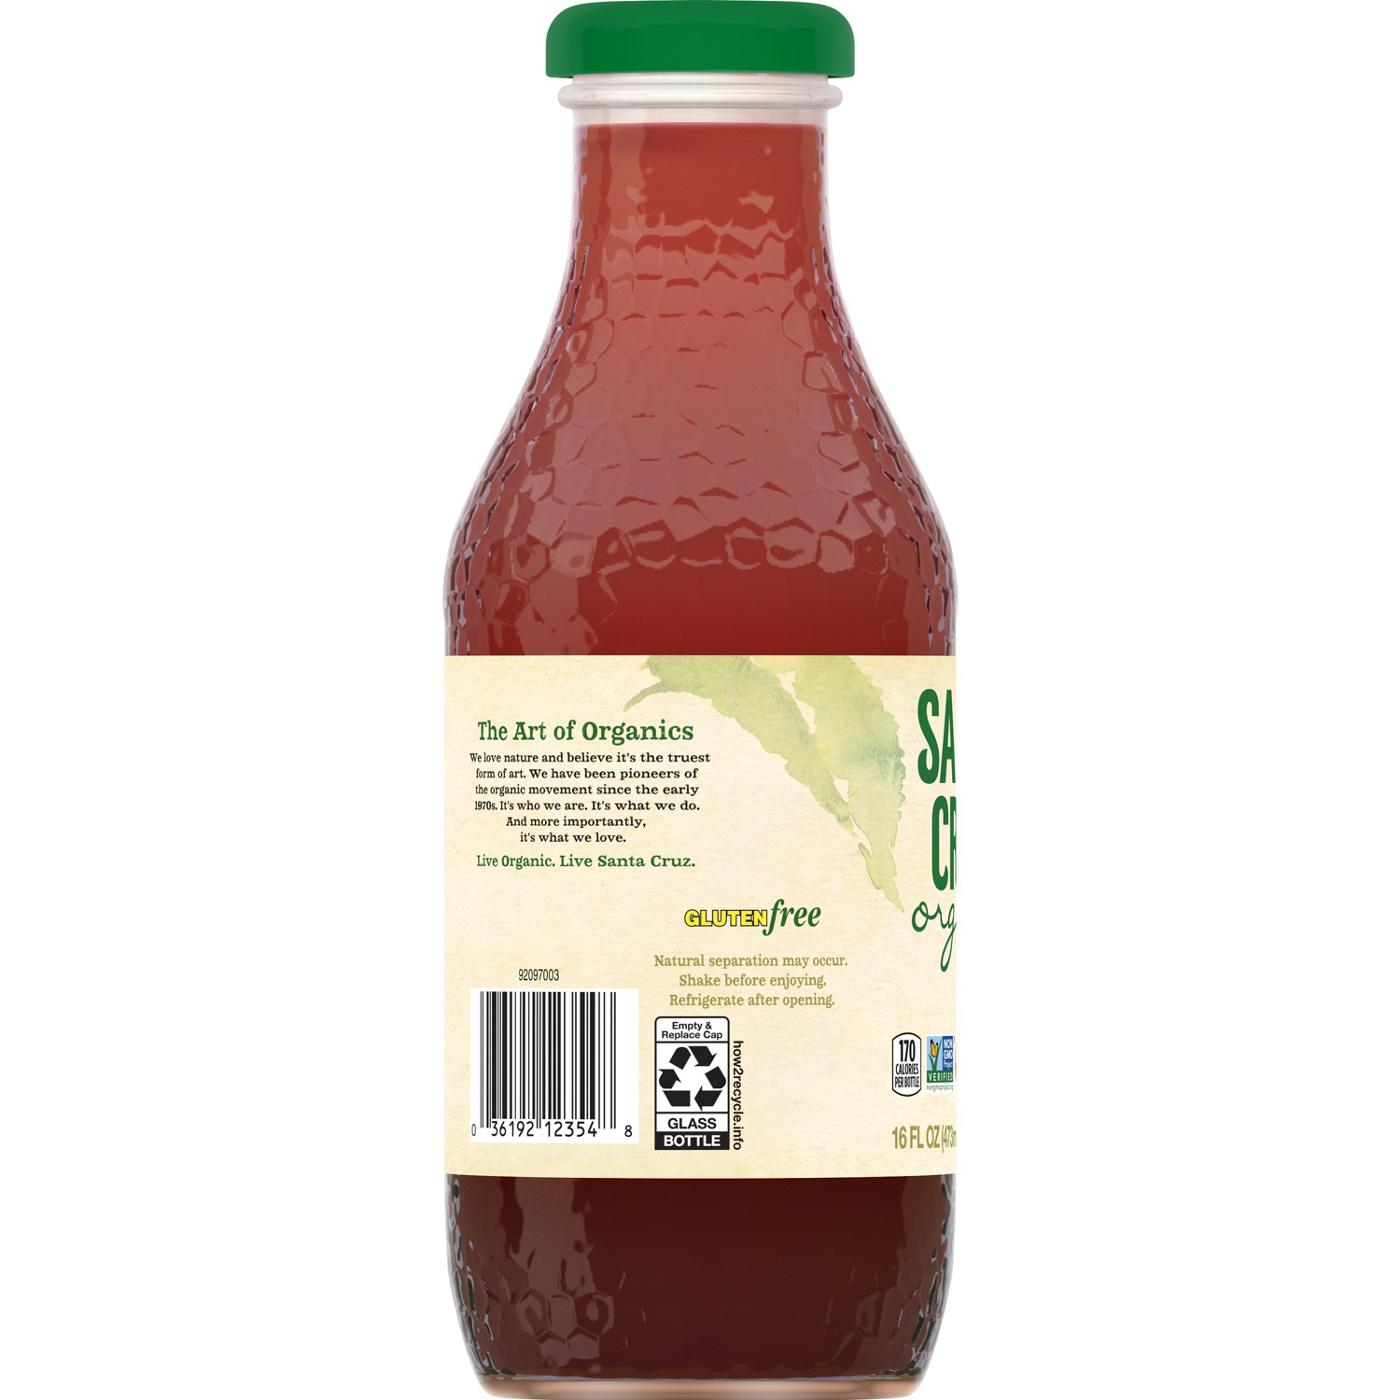 Santa Cruz Organic Strawberry Lemonade Beverage; image 4 of 4